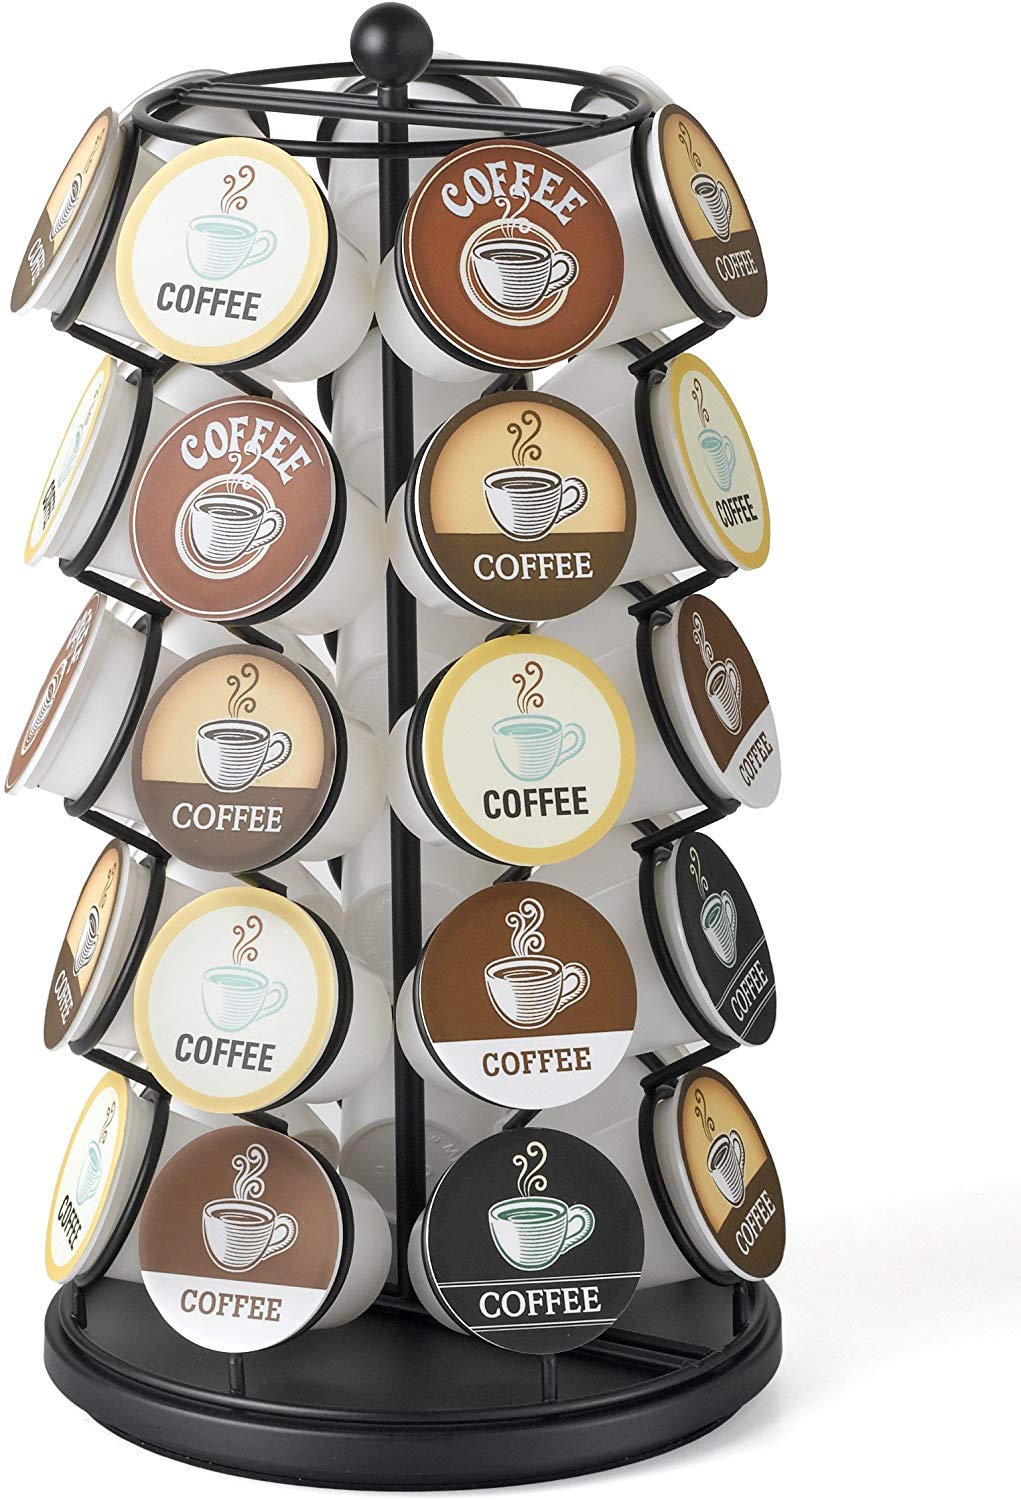 40 Keurig K Cup Holder Coffee Pod Carousel Stand Storage Organizer Display Black 